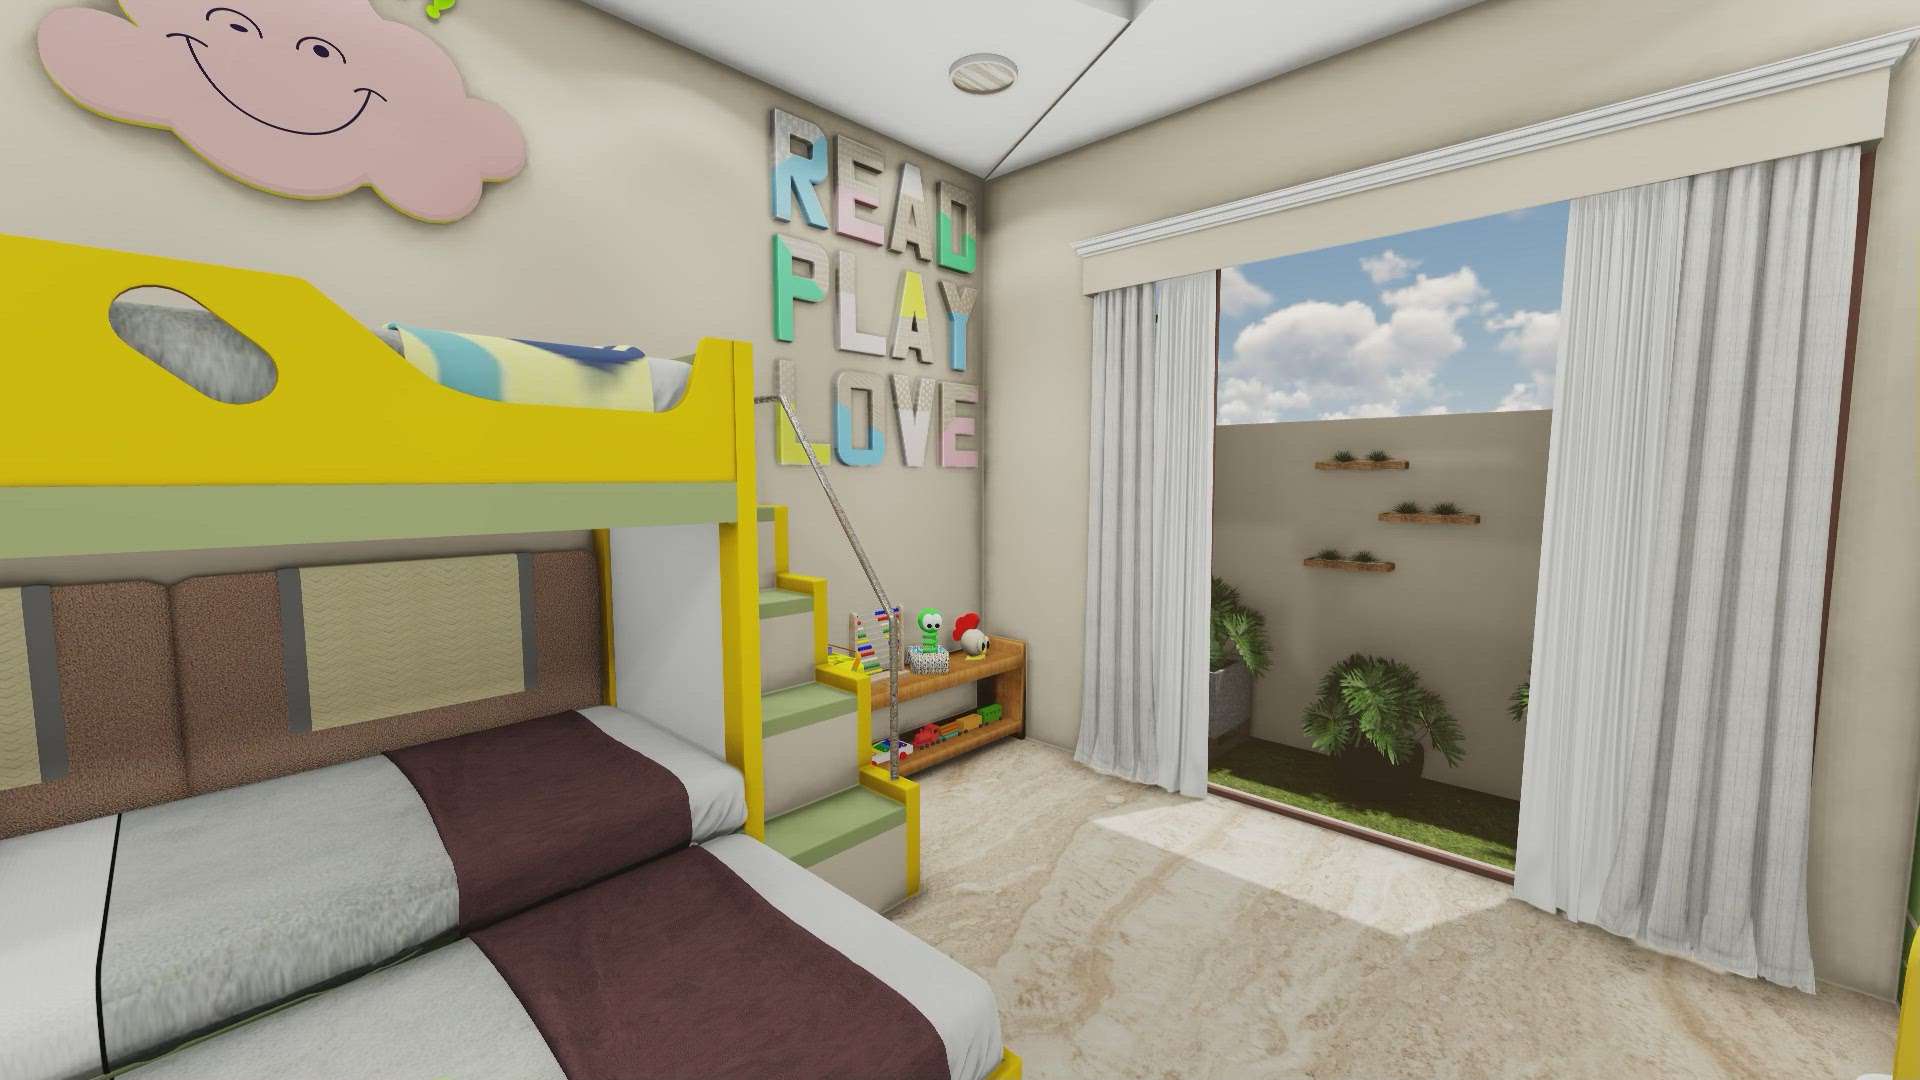 Every child is an artist 
kids bedroom design😊 #KidsRoom #InteriorDesigner